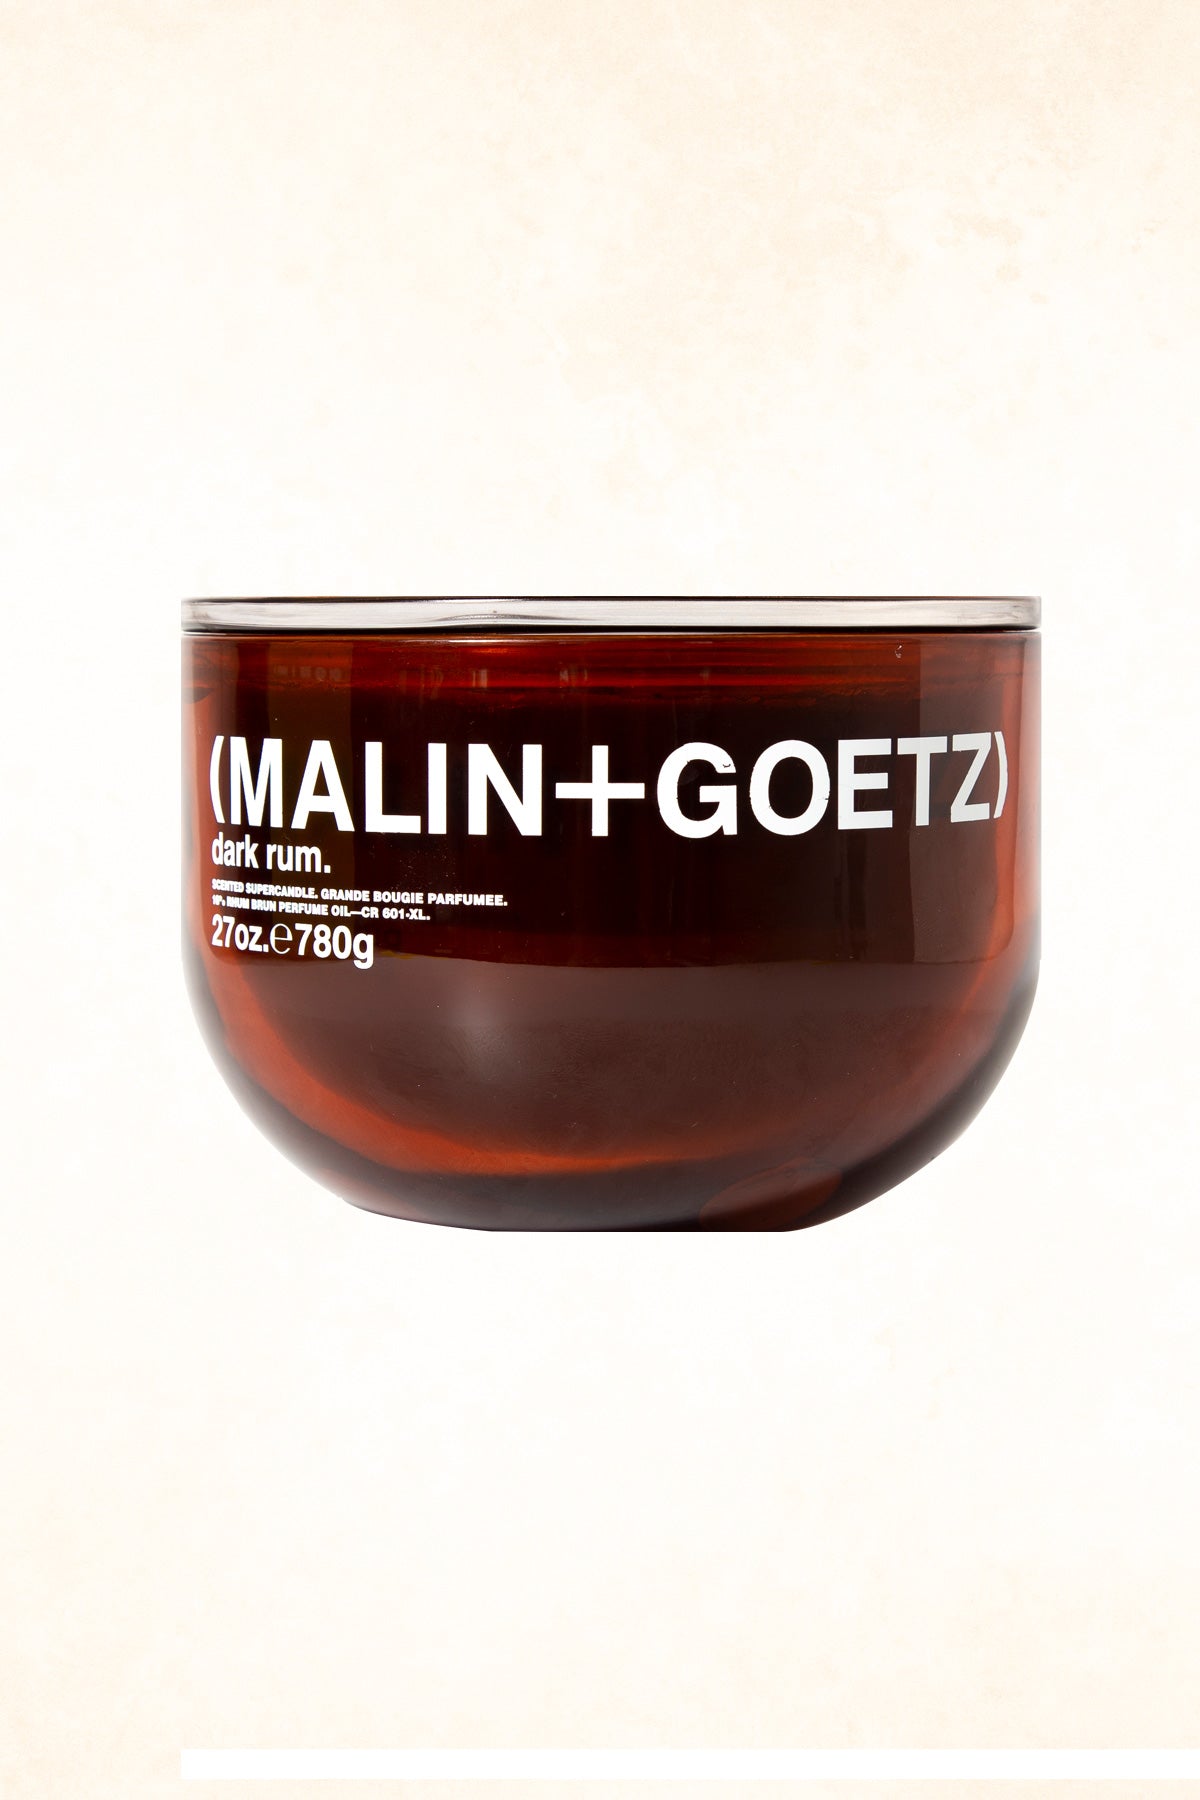 Malin+Goetz – Dark Rum Supercandle 27 OZ / 780 G - Limited Edition